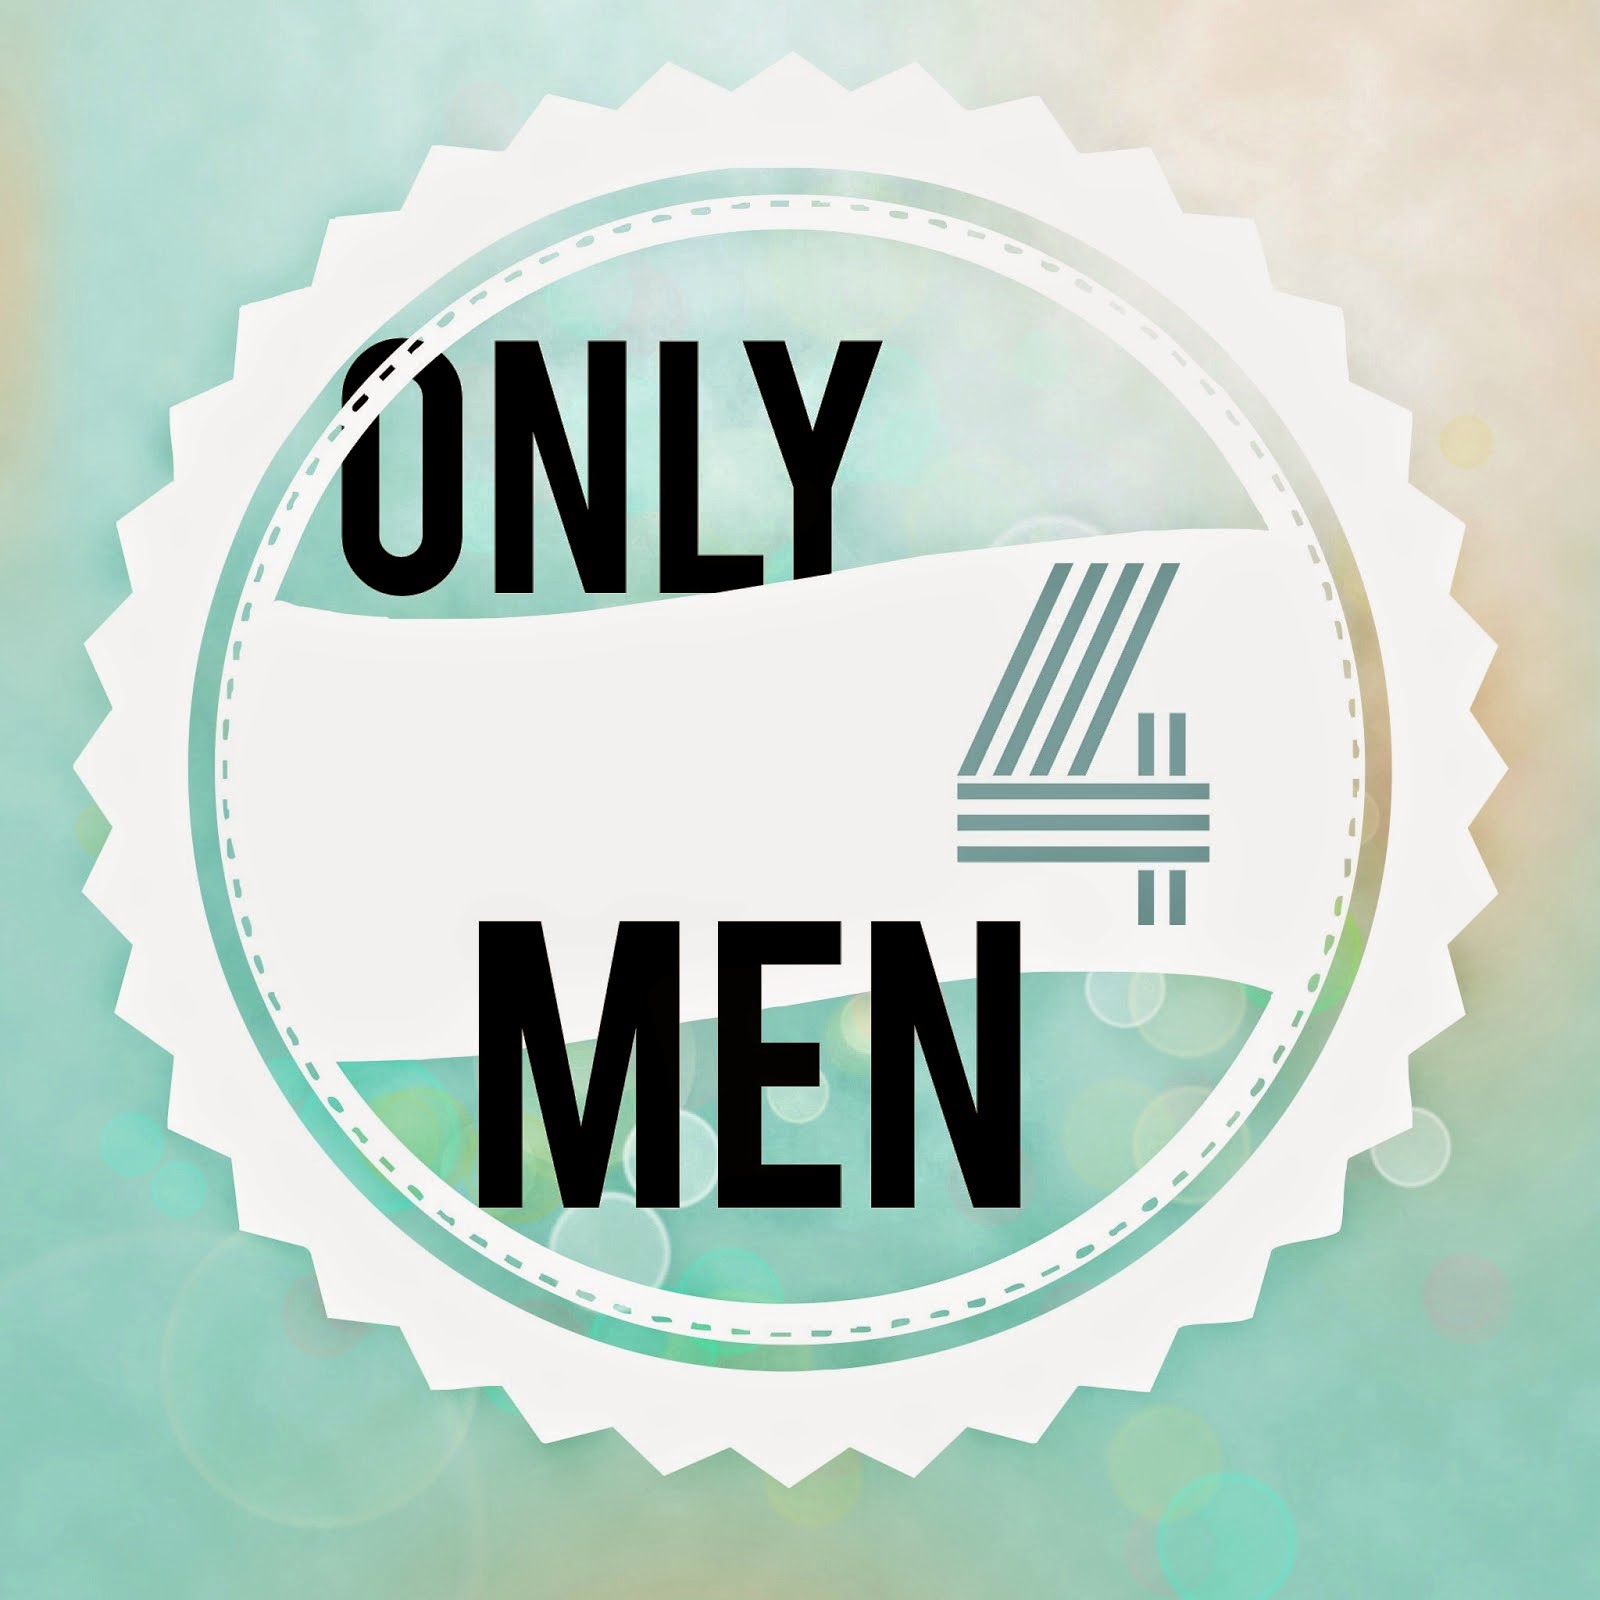 Only 4 Men